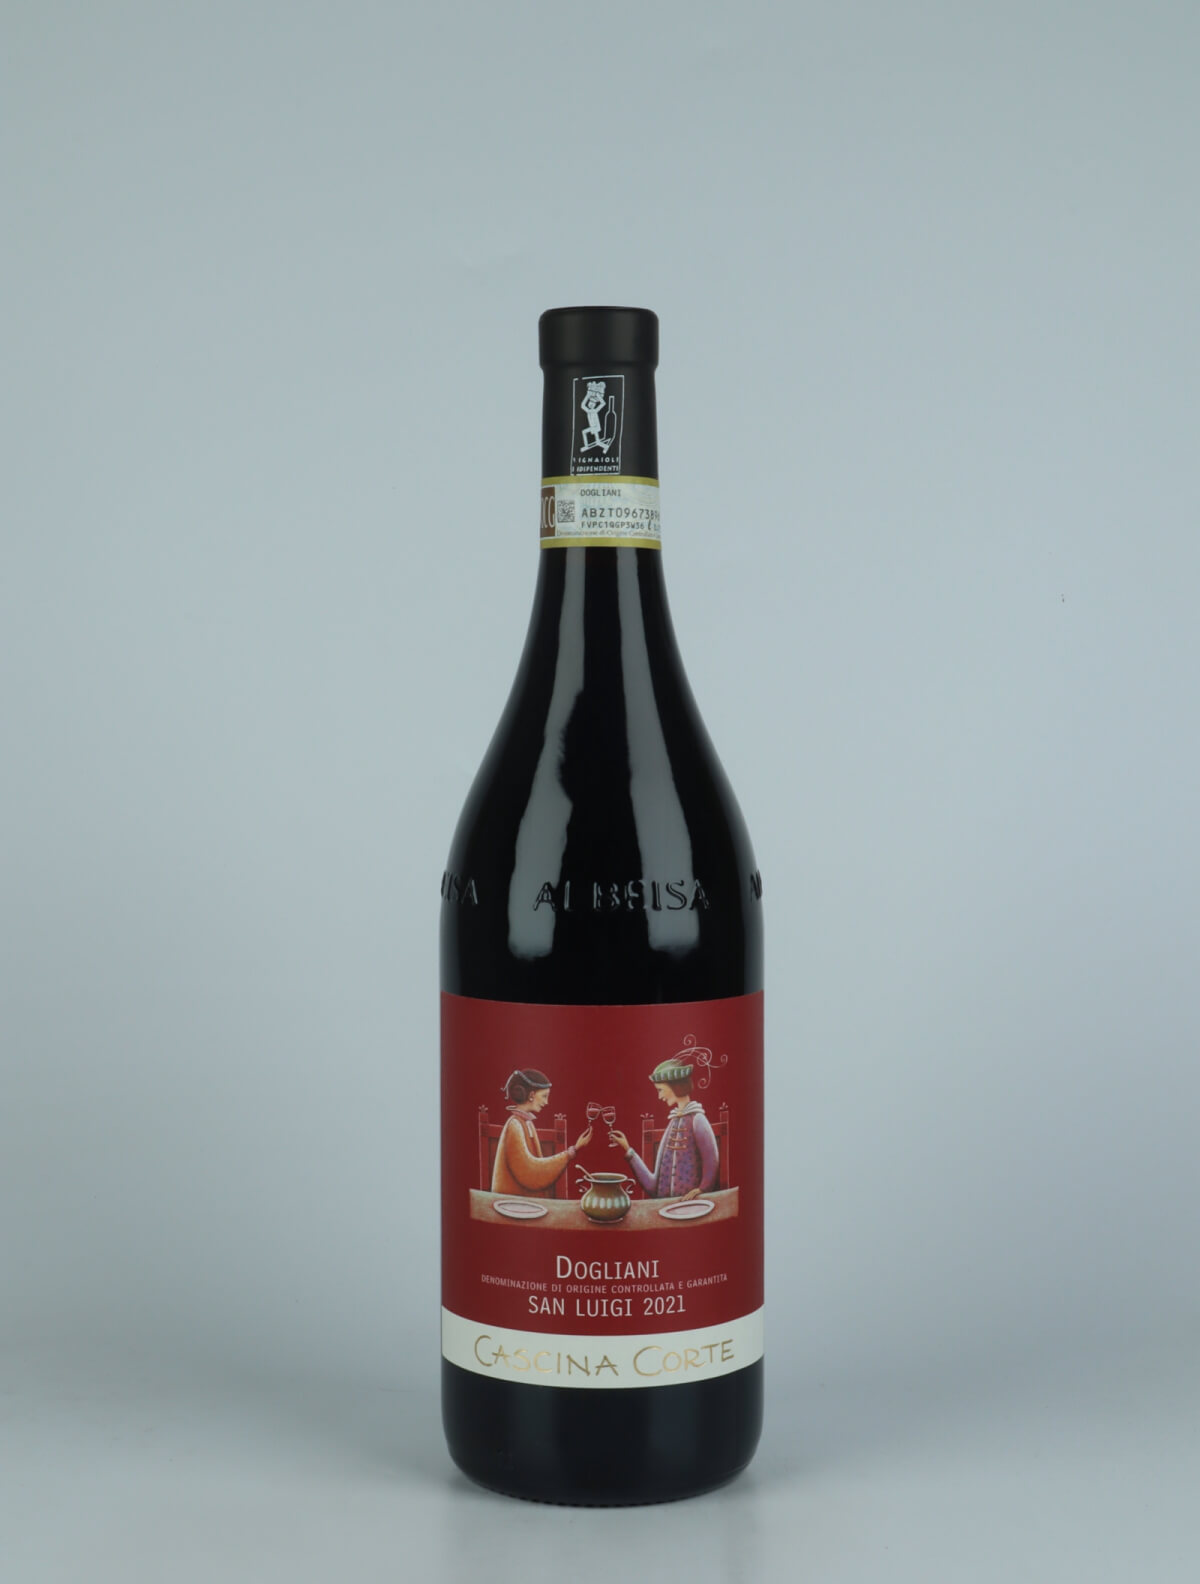 En flaske 2021 Dogliani - San Luigi Rødvin fra Cascina Corte, Piemonte i Italien